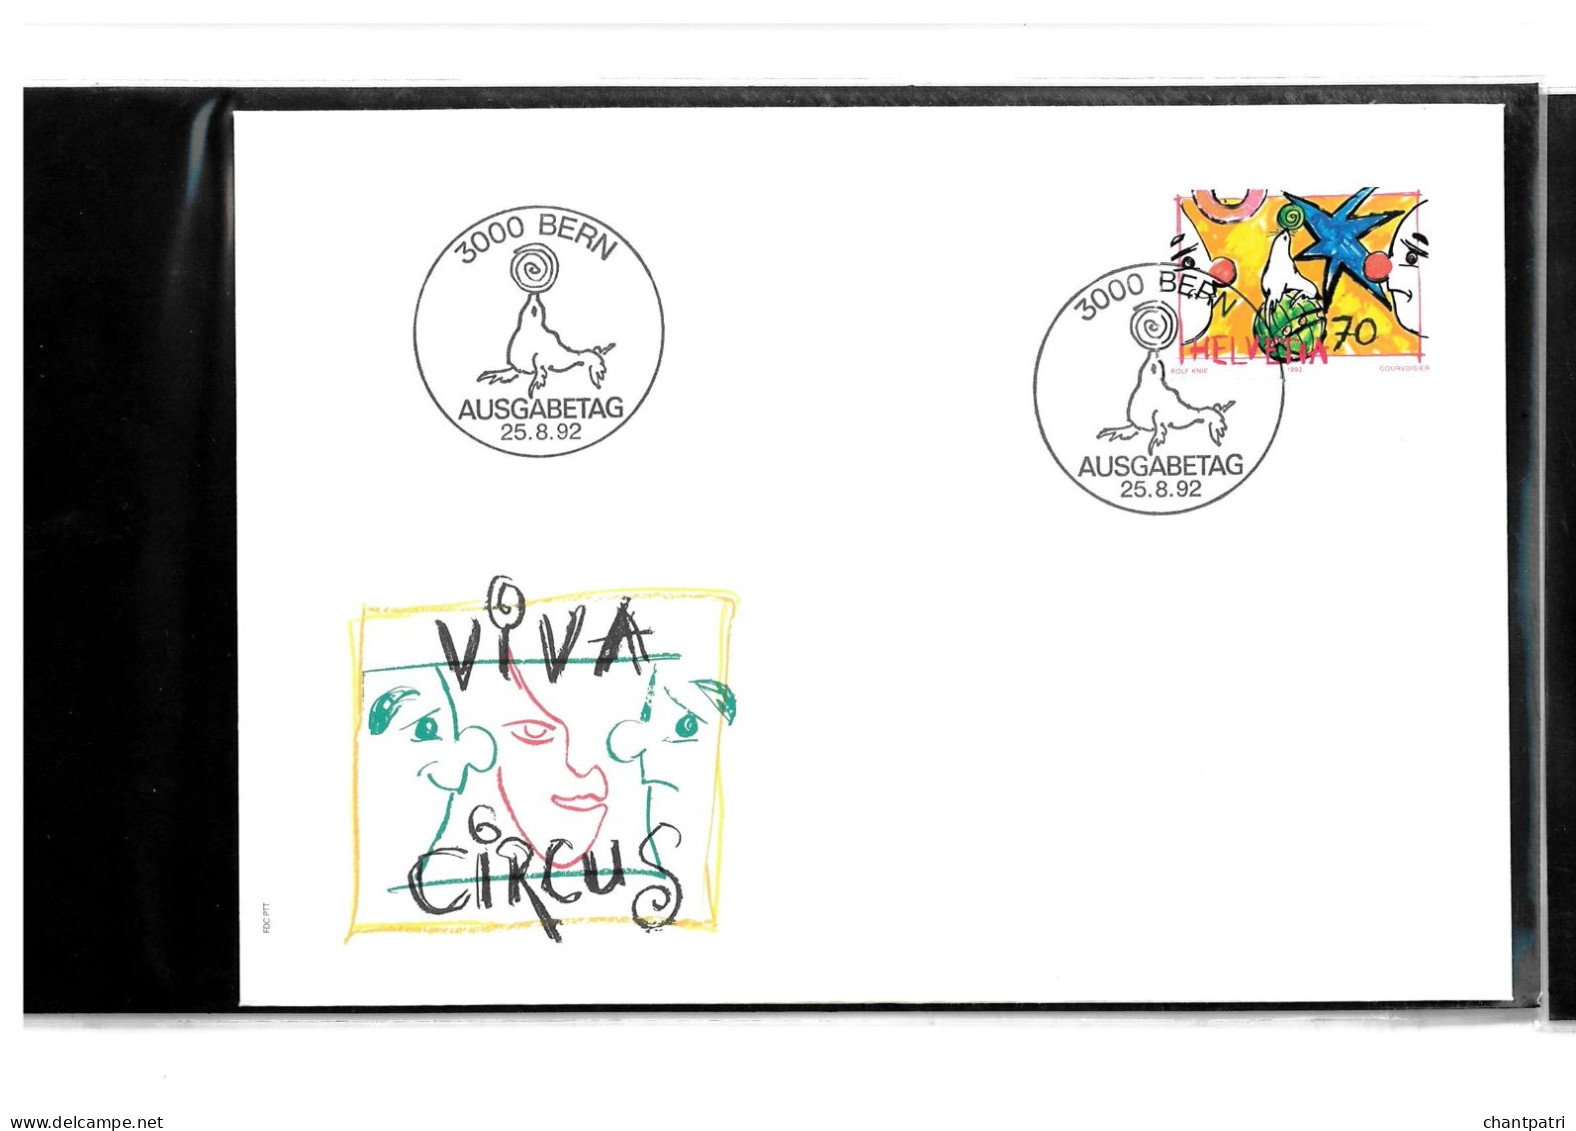 3000 Bern - Viva Circus - Ausgabetag - 25 08 1992 - Beli FDC 013 - Covers & Documents